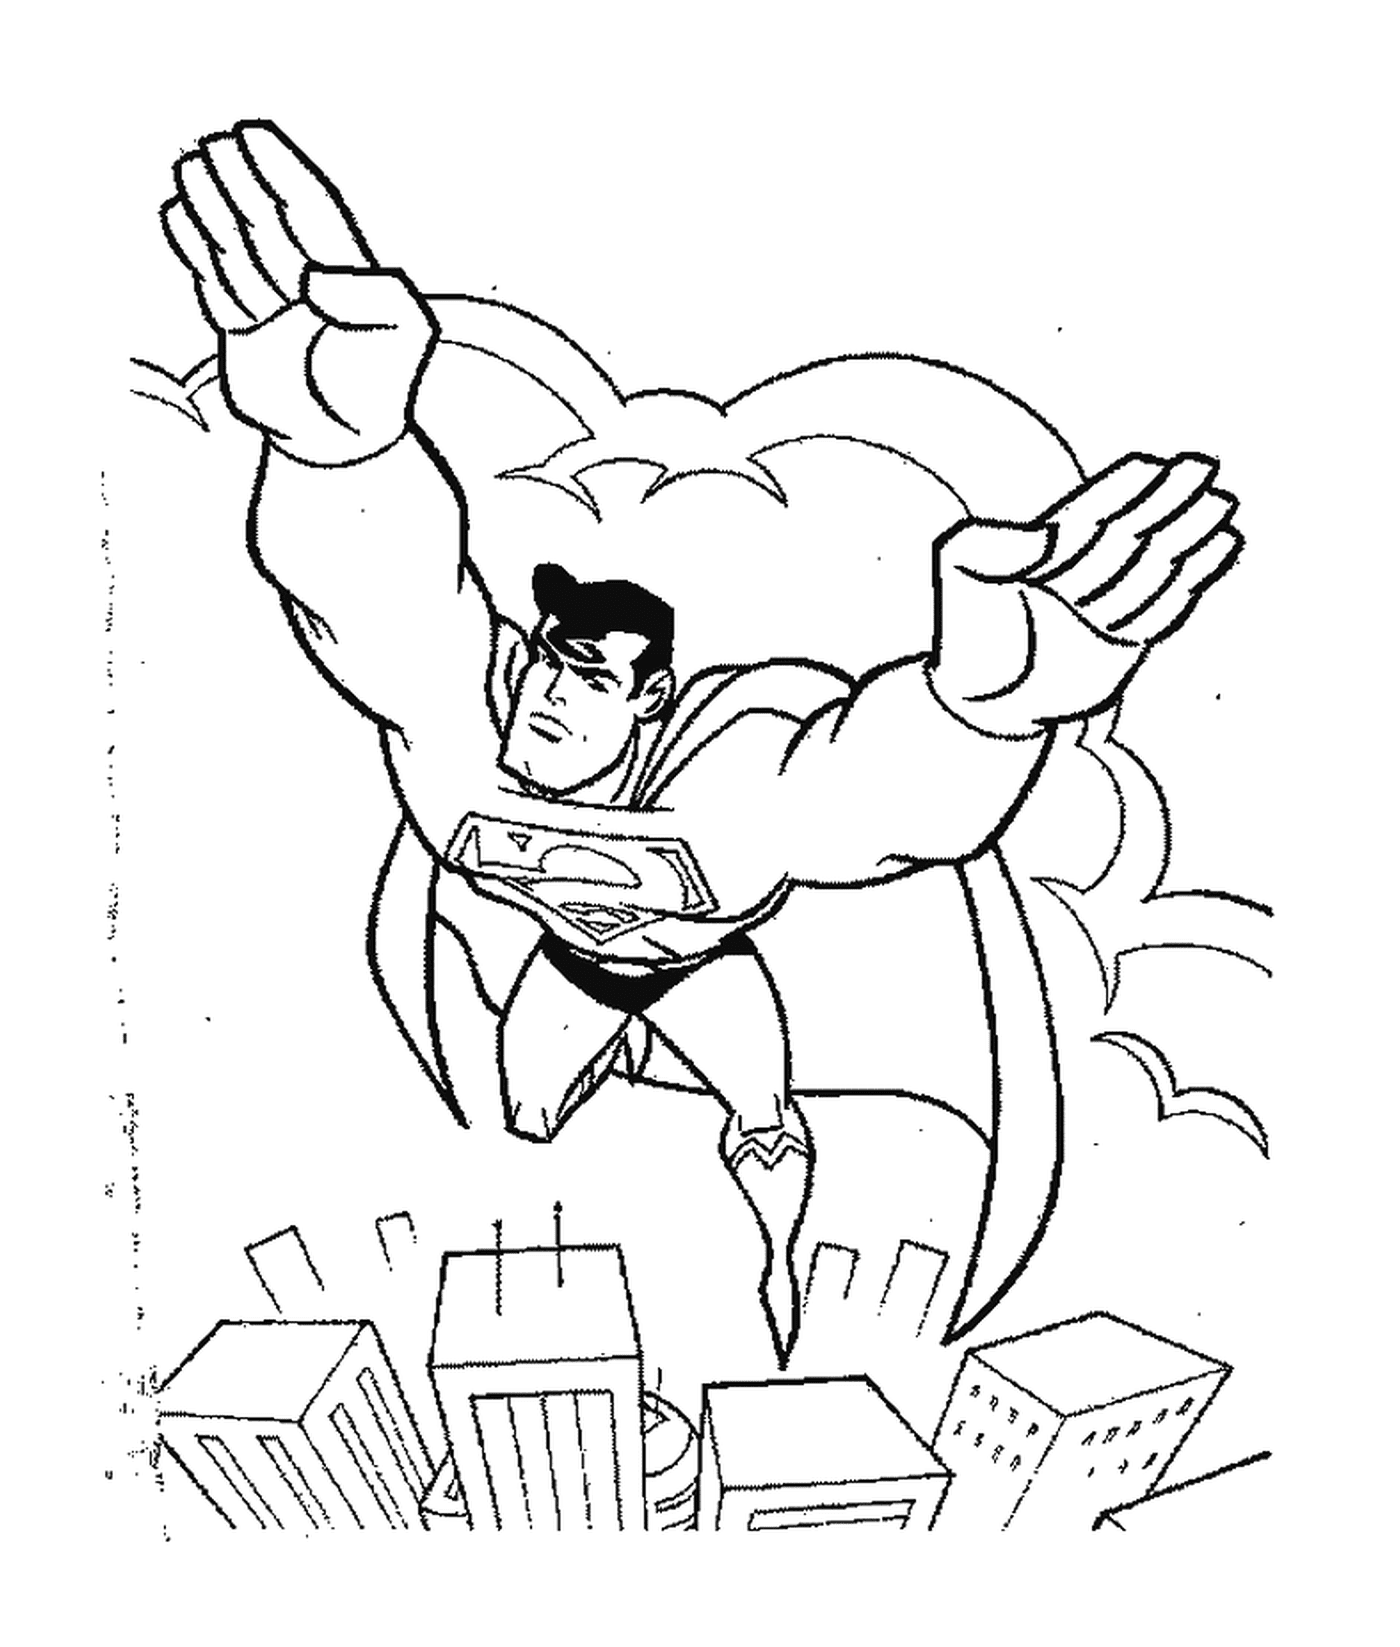  Superman sobrevoa os arranha-céus 